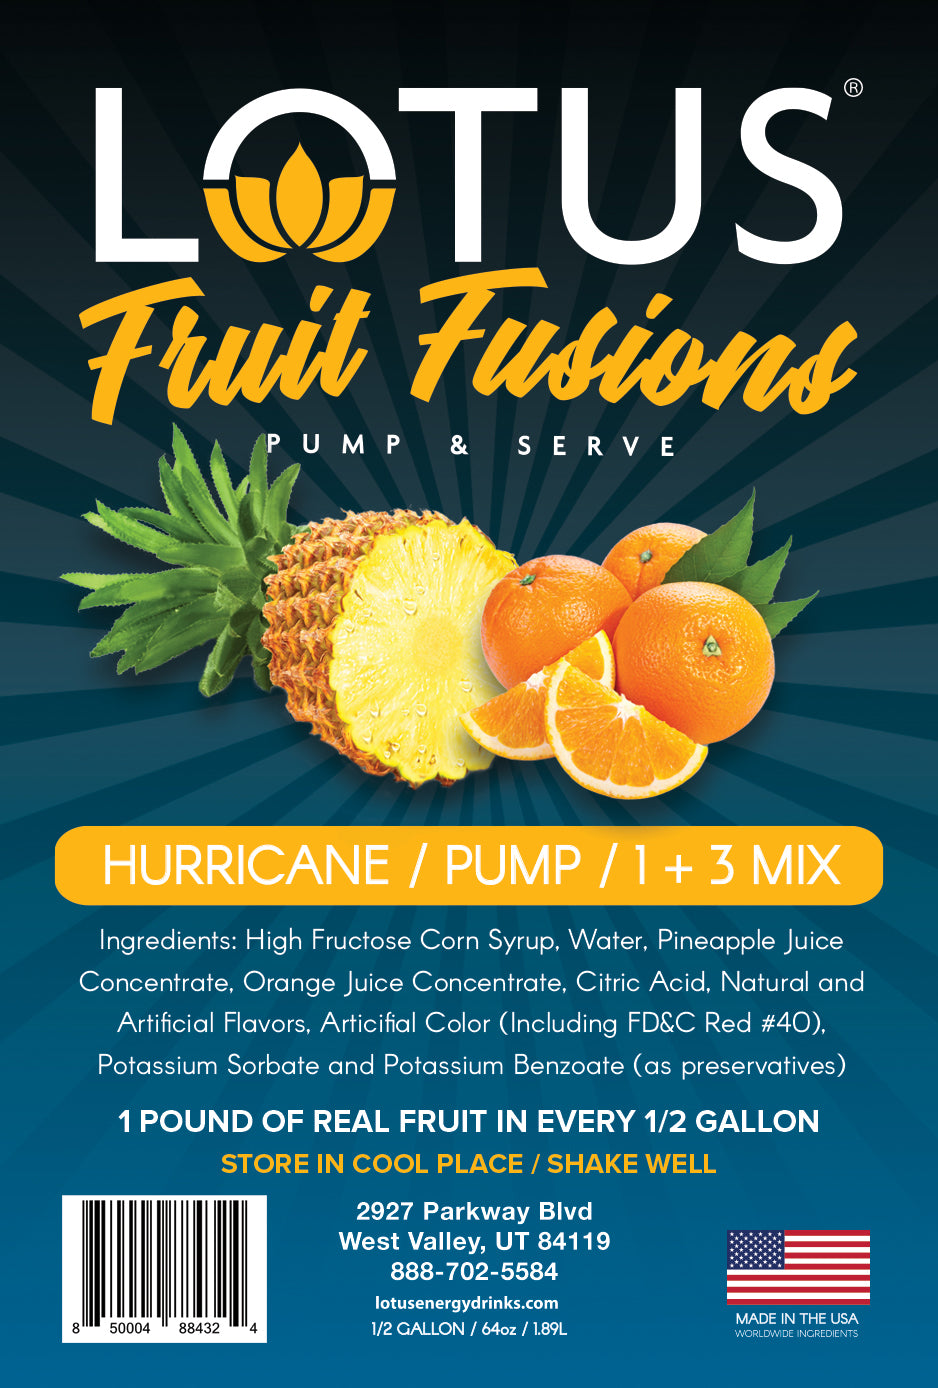 Hurricane Lotus Fruit Fusion Label